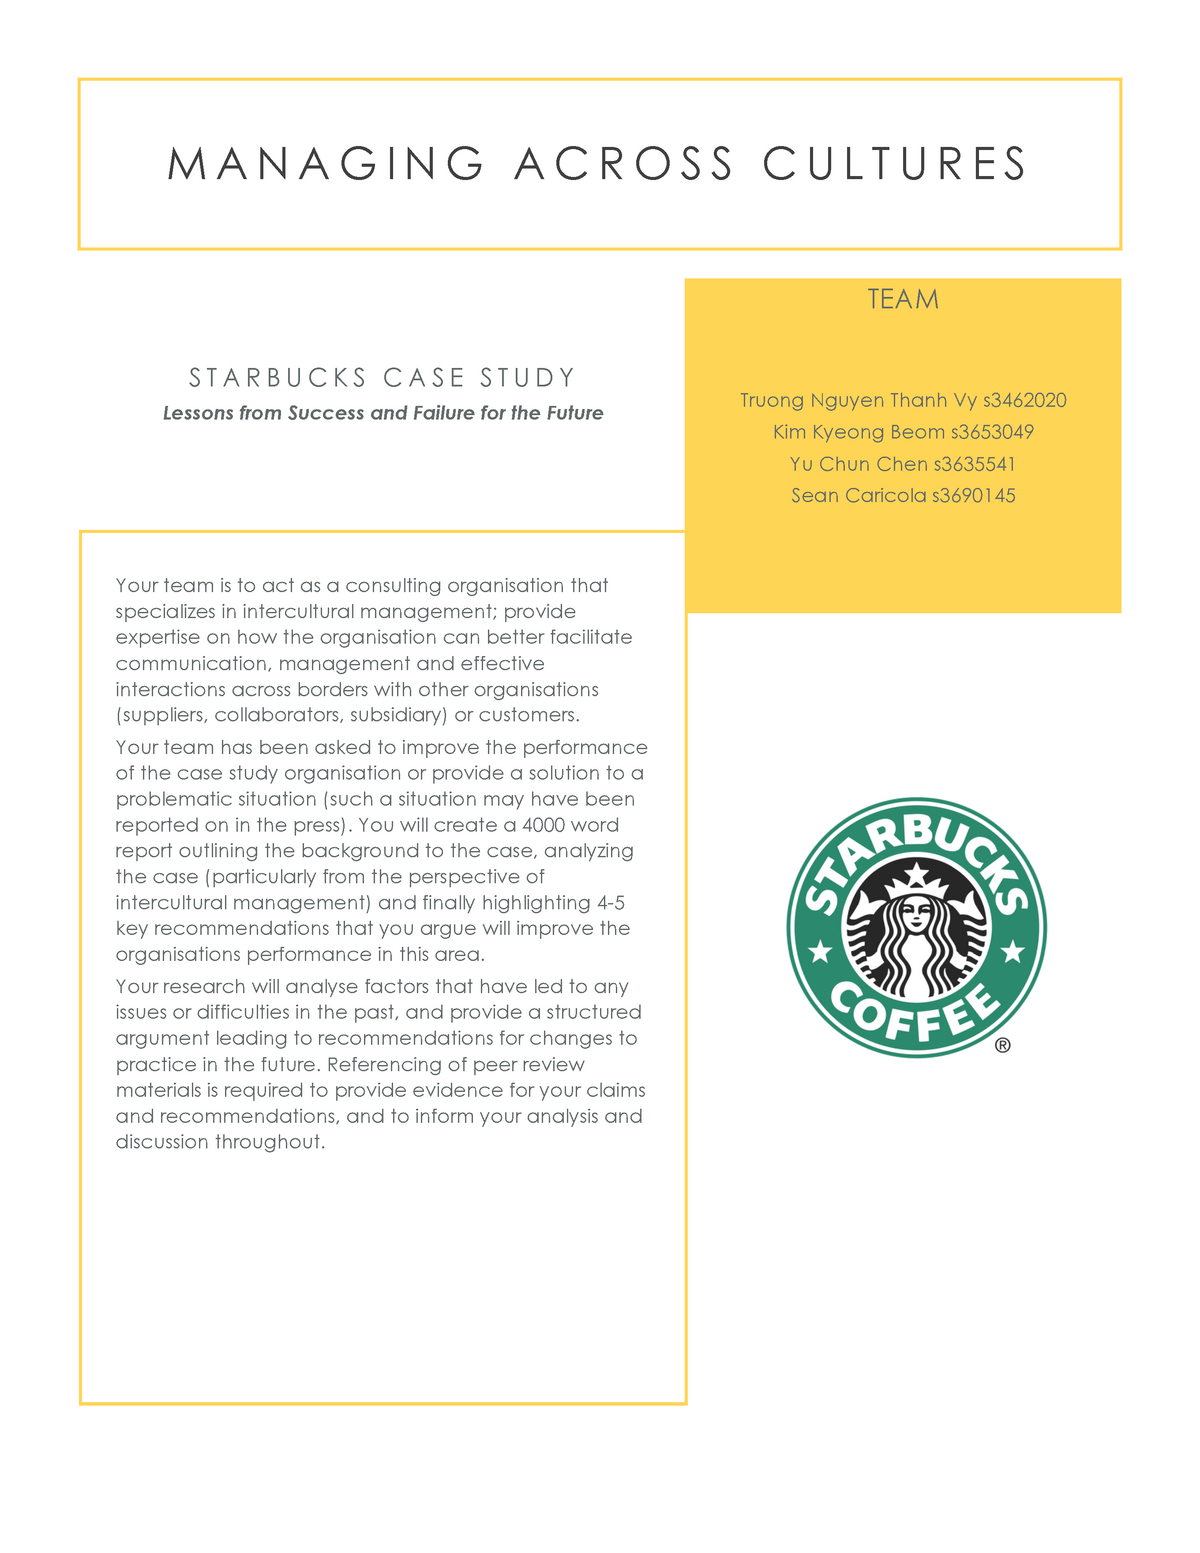 starbucks coffee case study summary